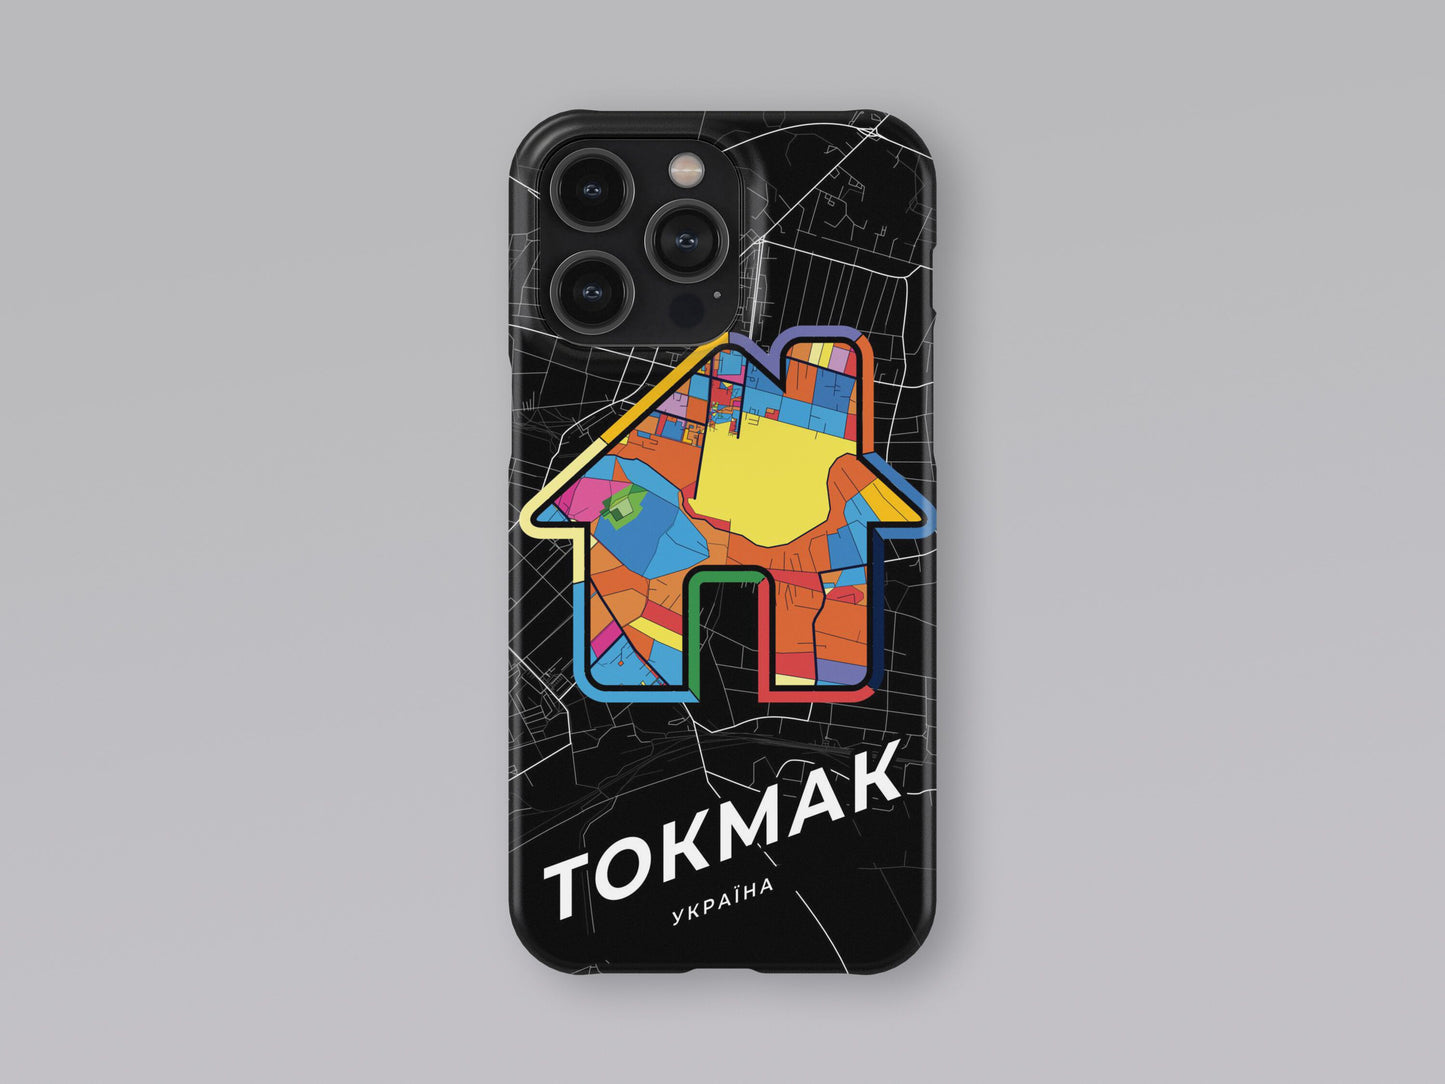 Tokmak Ukraine slim phone case with colorful icon 3